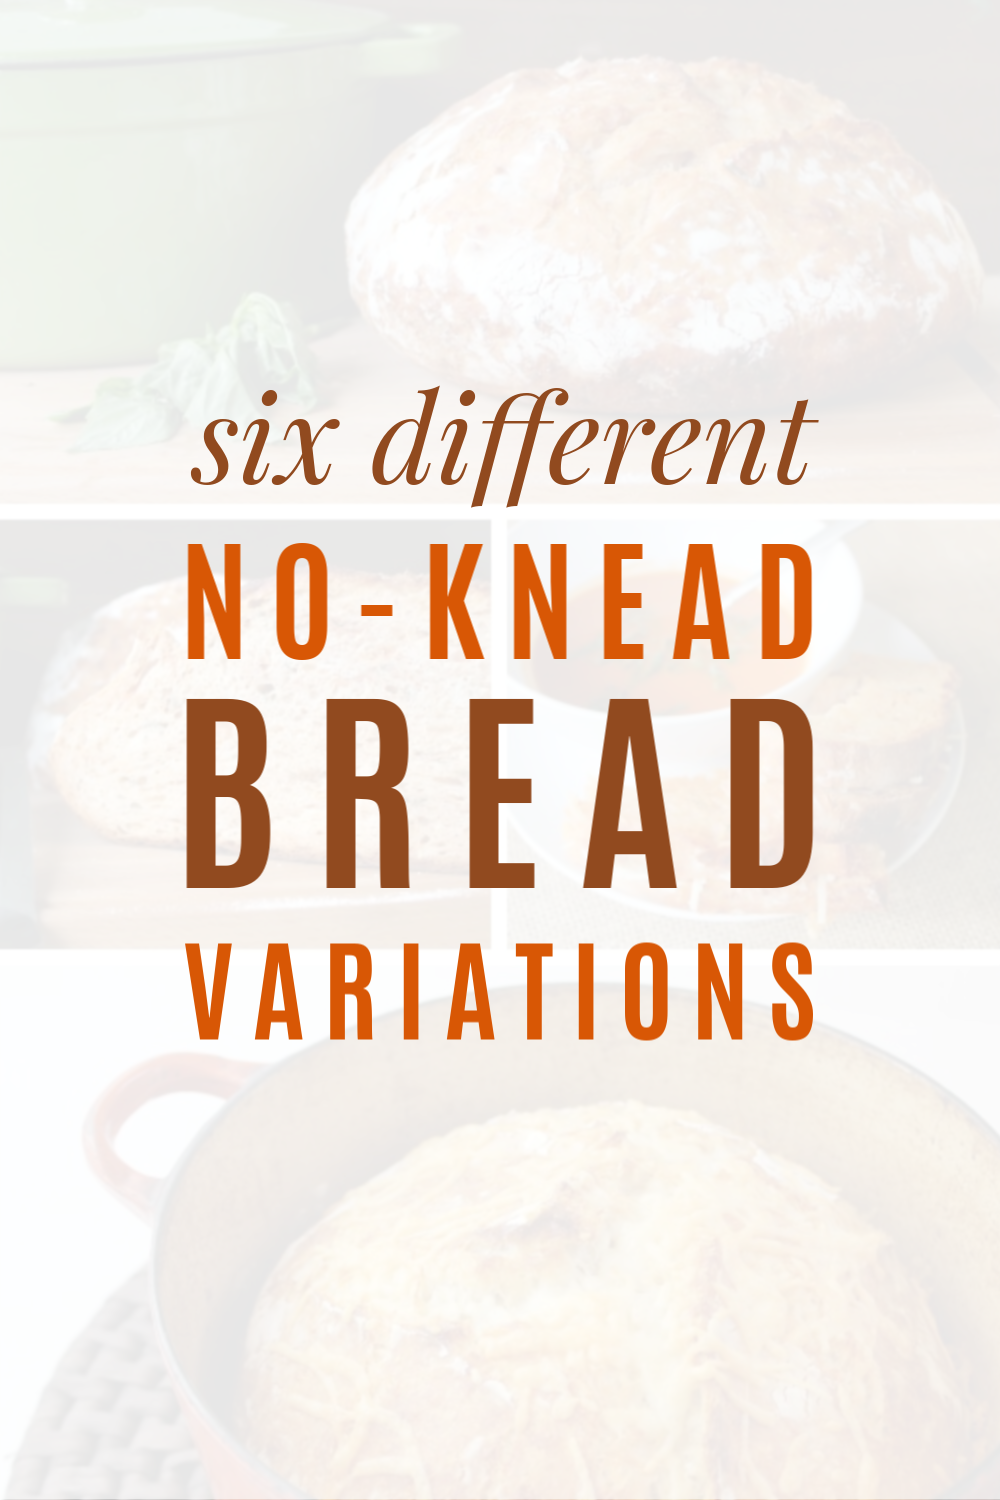 https://www.frugallivingnw.com/wp-content/uploads/2020/03/no-knead-bread-variations-1.png